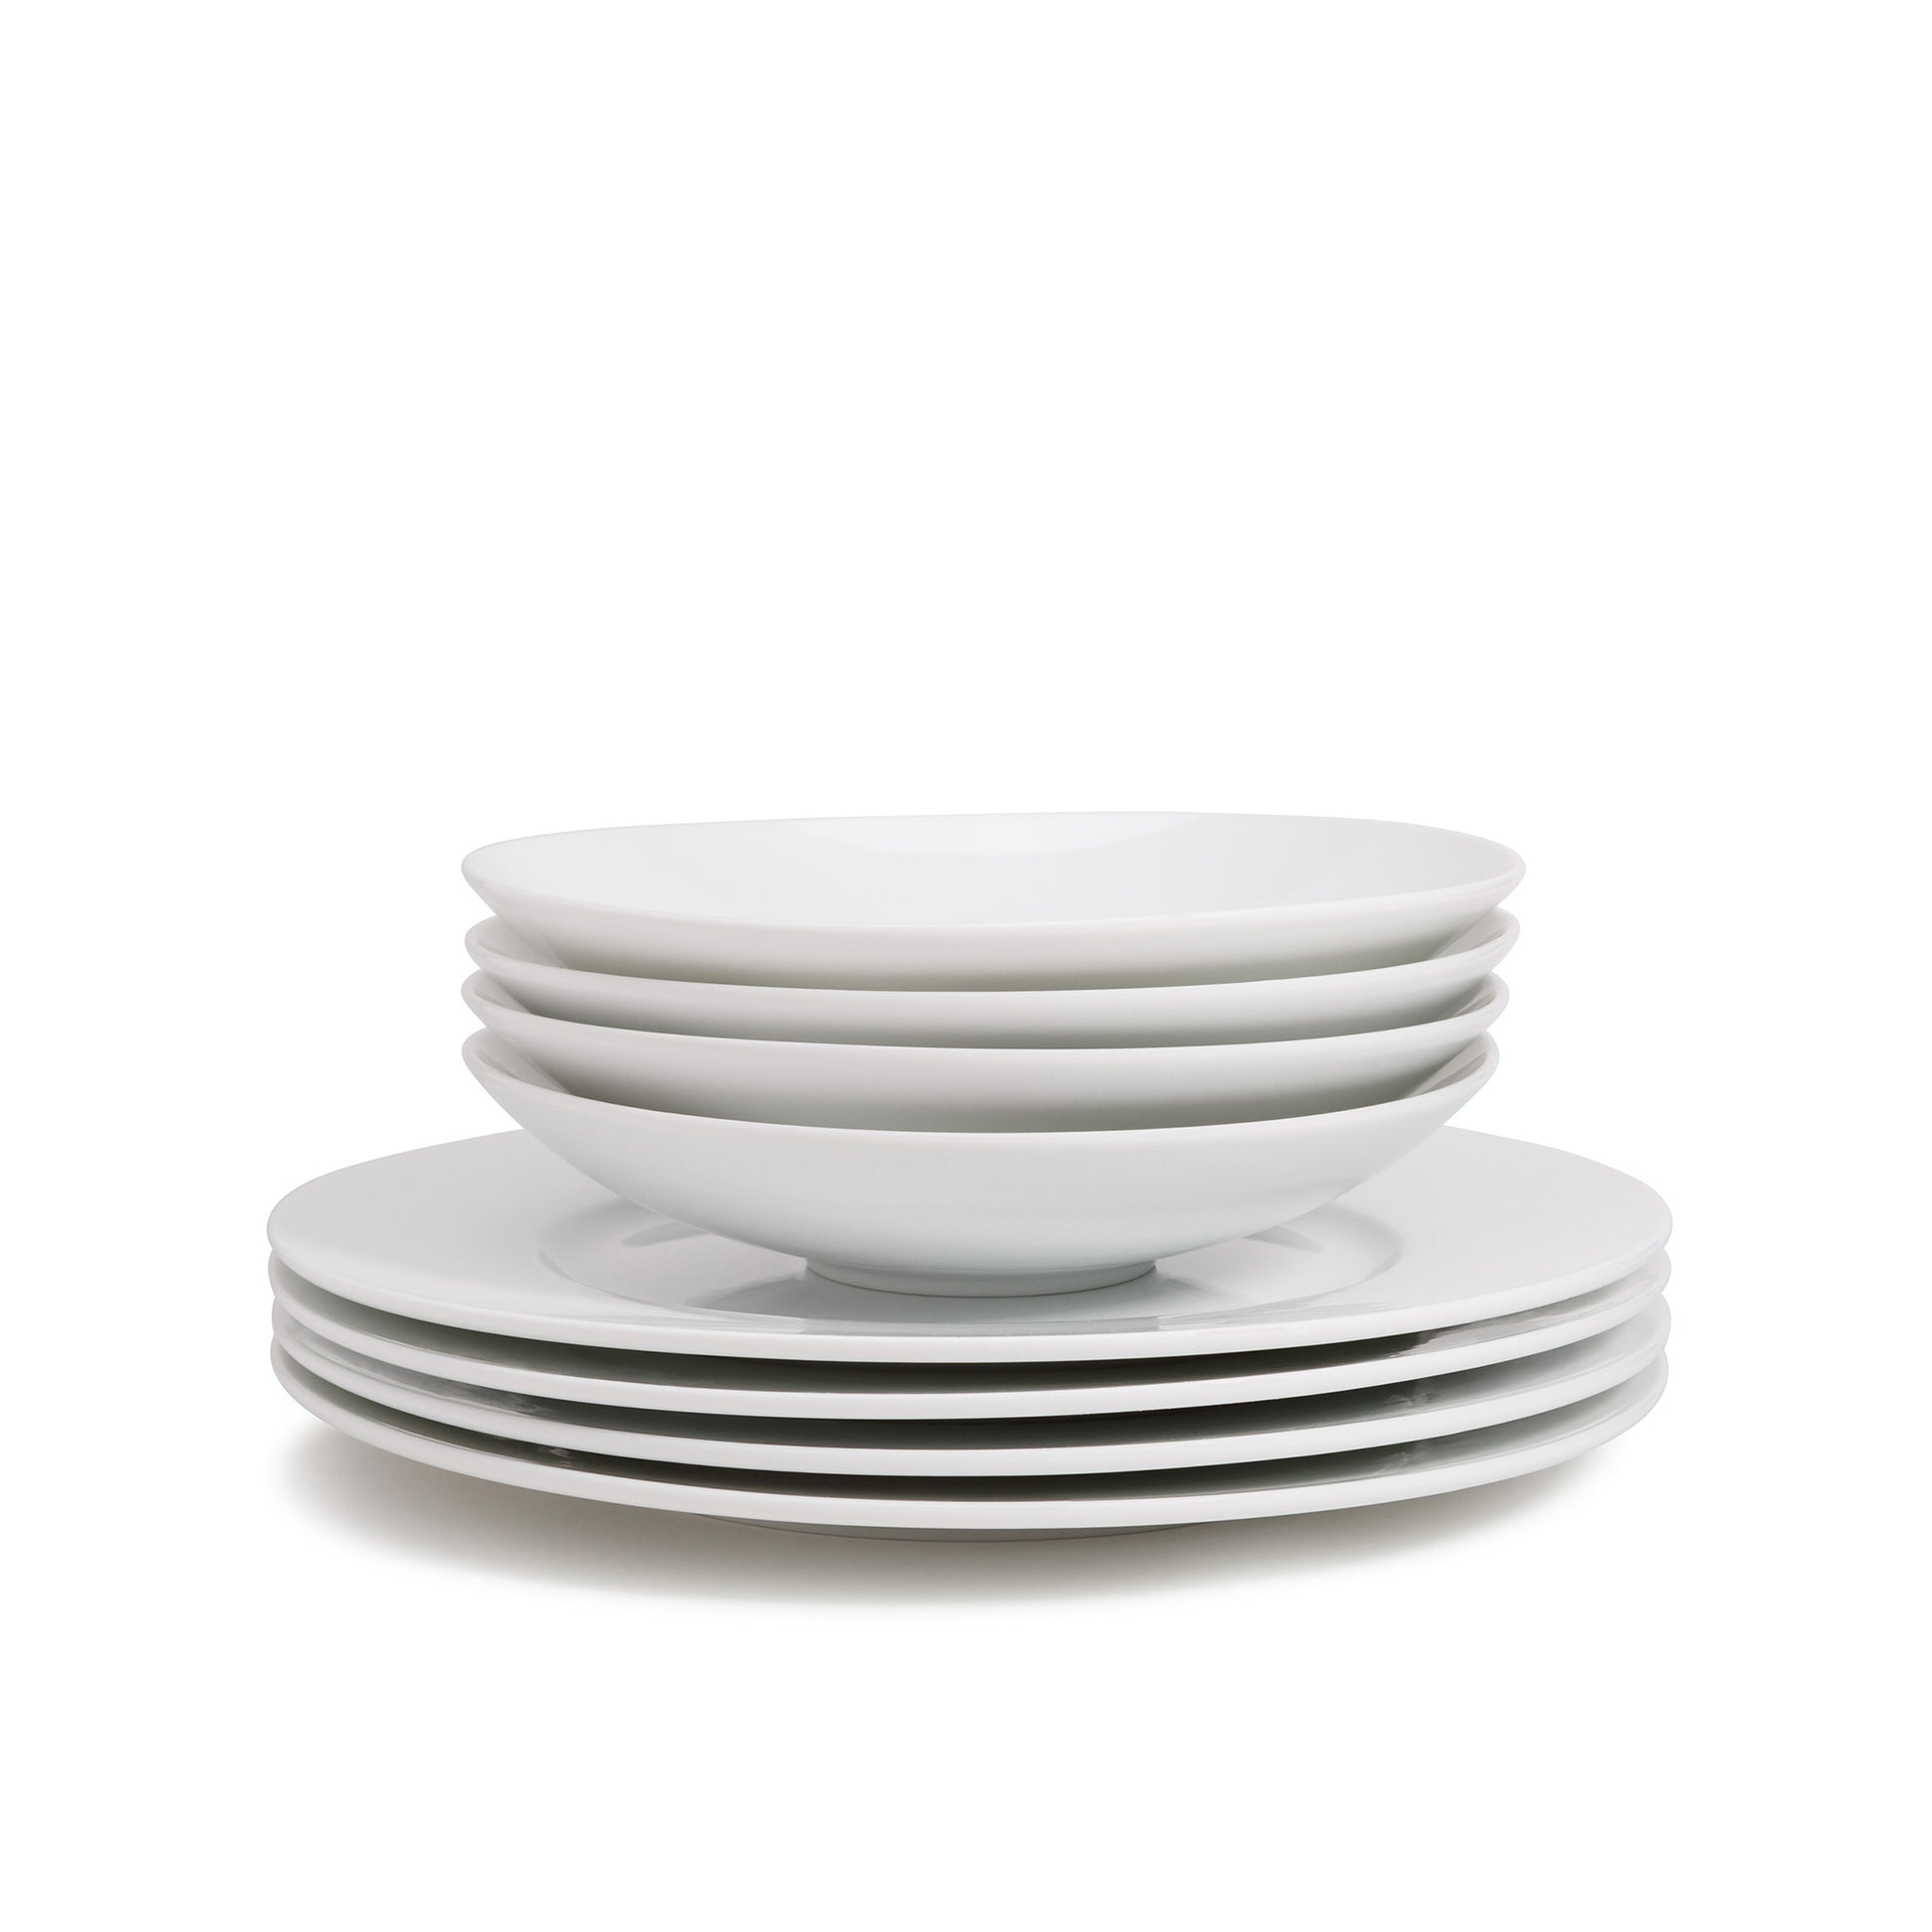 8 piece white porcelain dinnerware set, 11 3/4" wide rim dinner plates, 8" salad/soup bowls, media 2 of 4